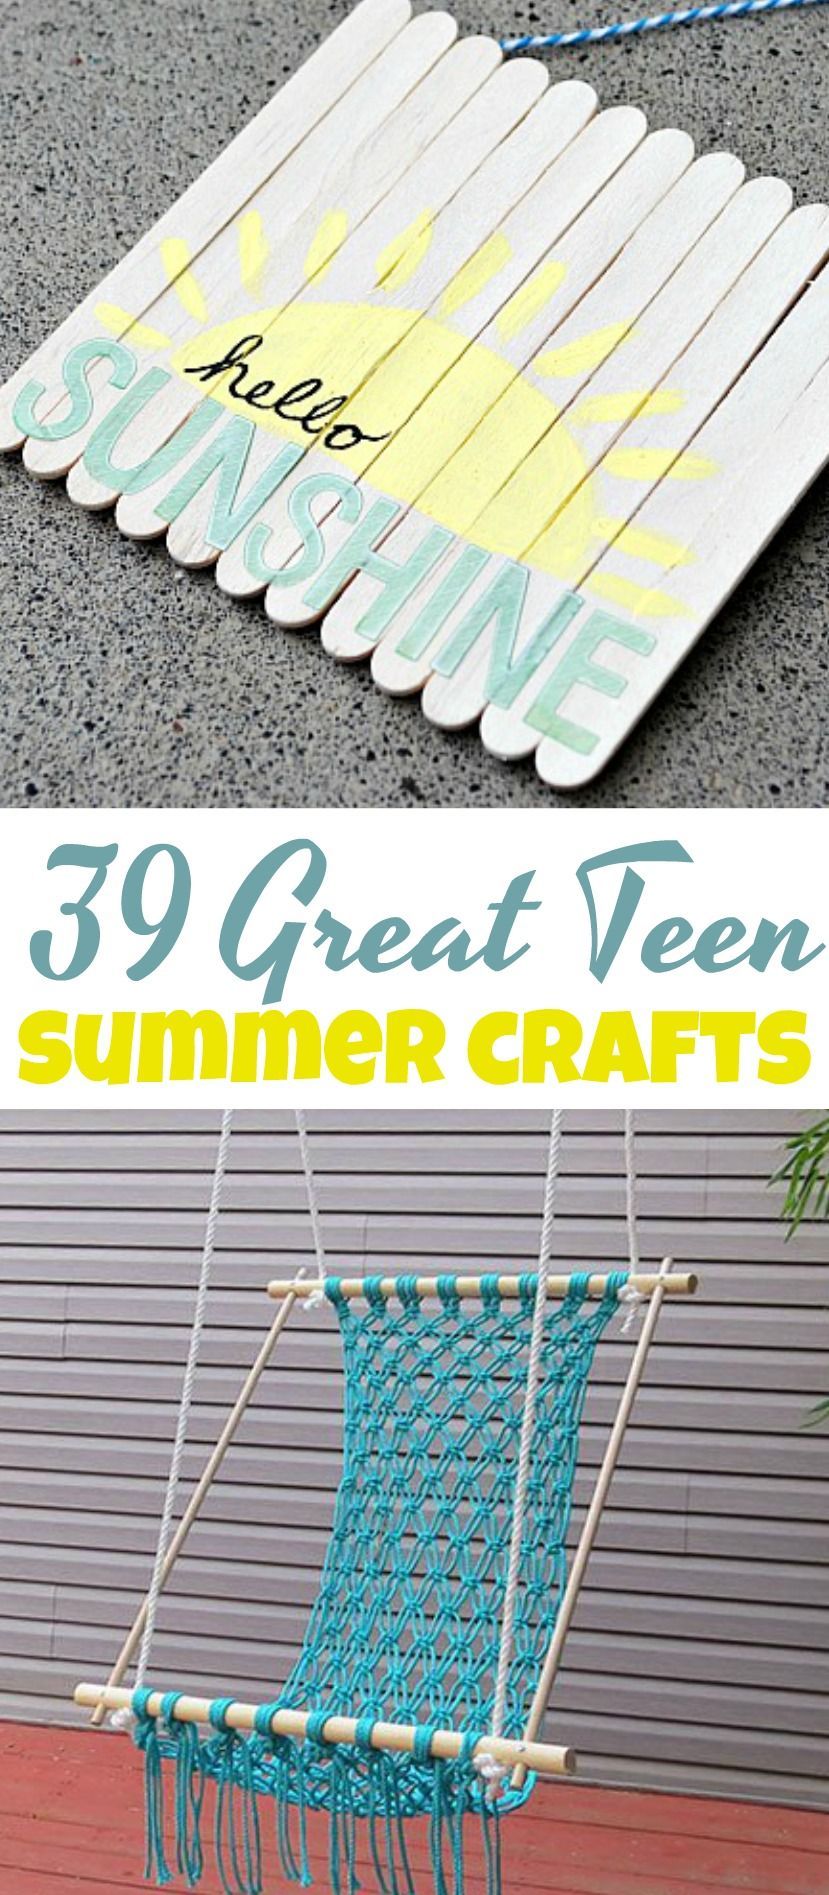 39 Great Teen Summer Crafts -   23 easy diy for teens
 ideas